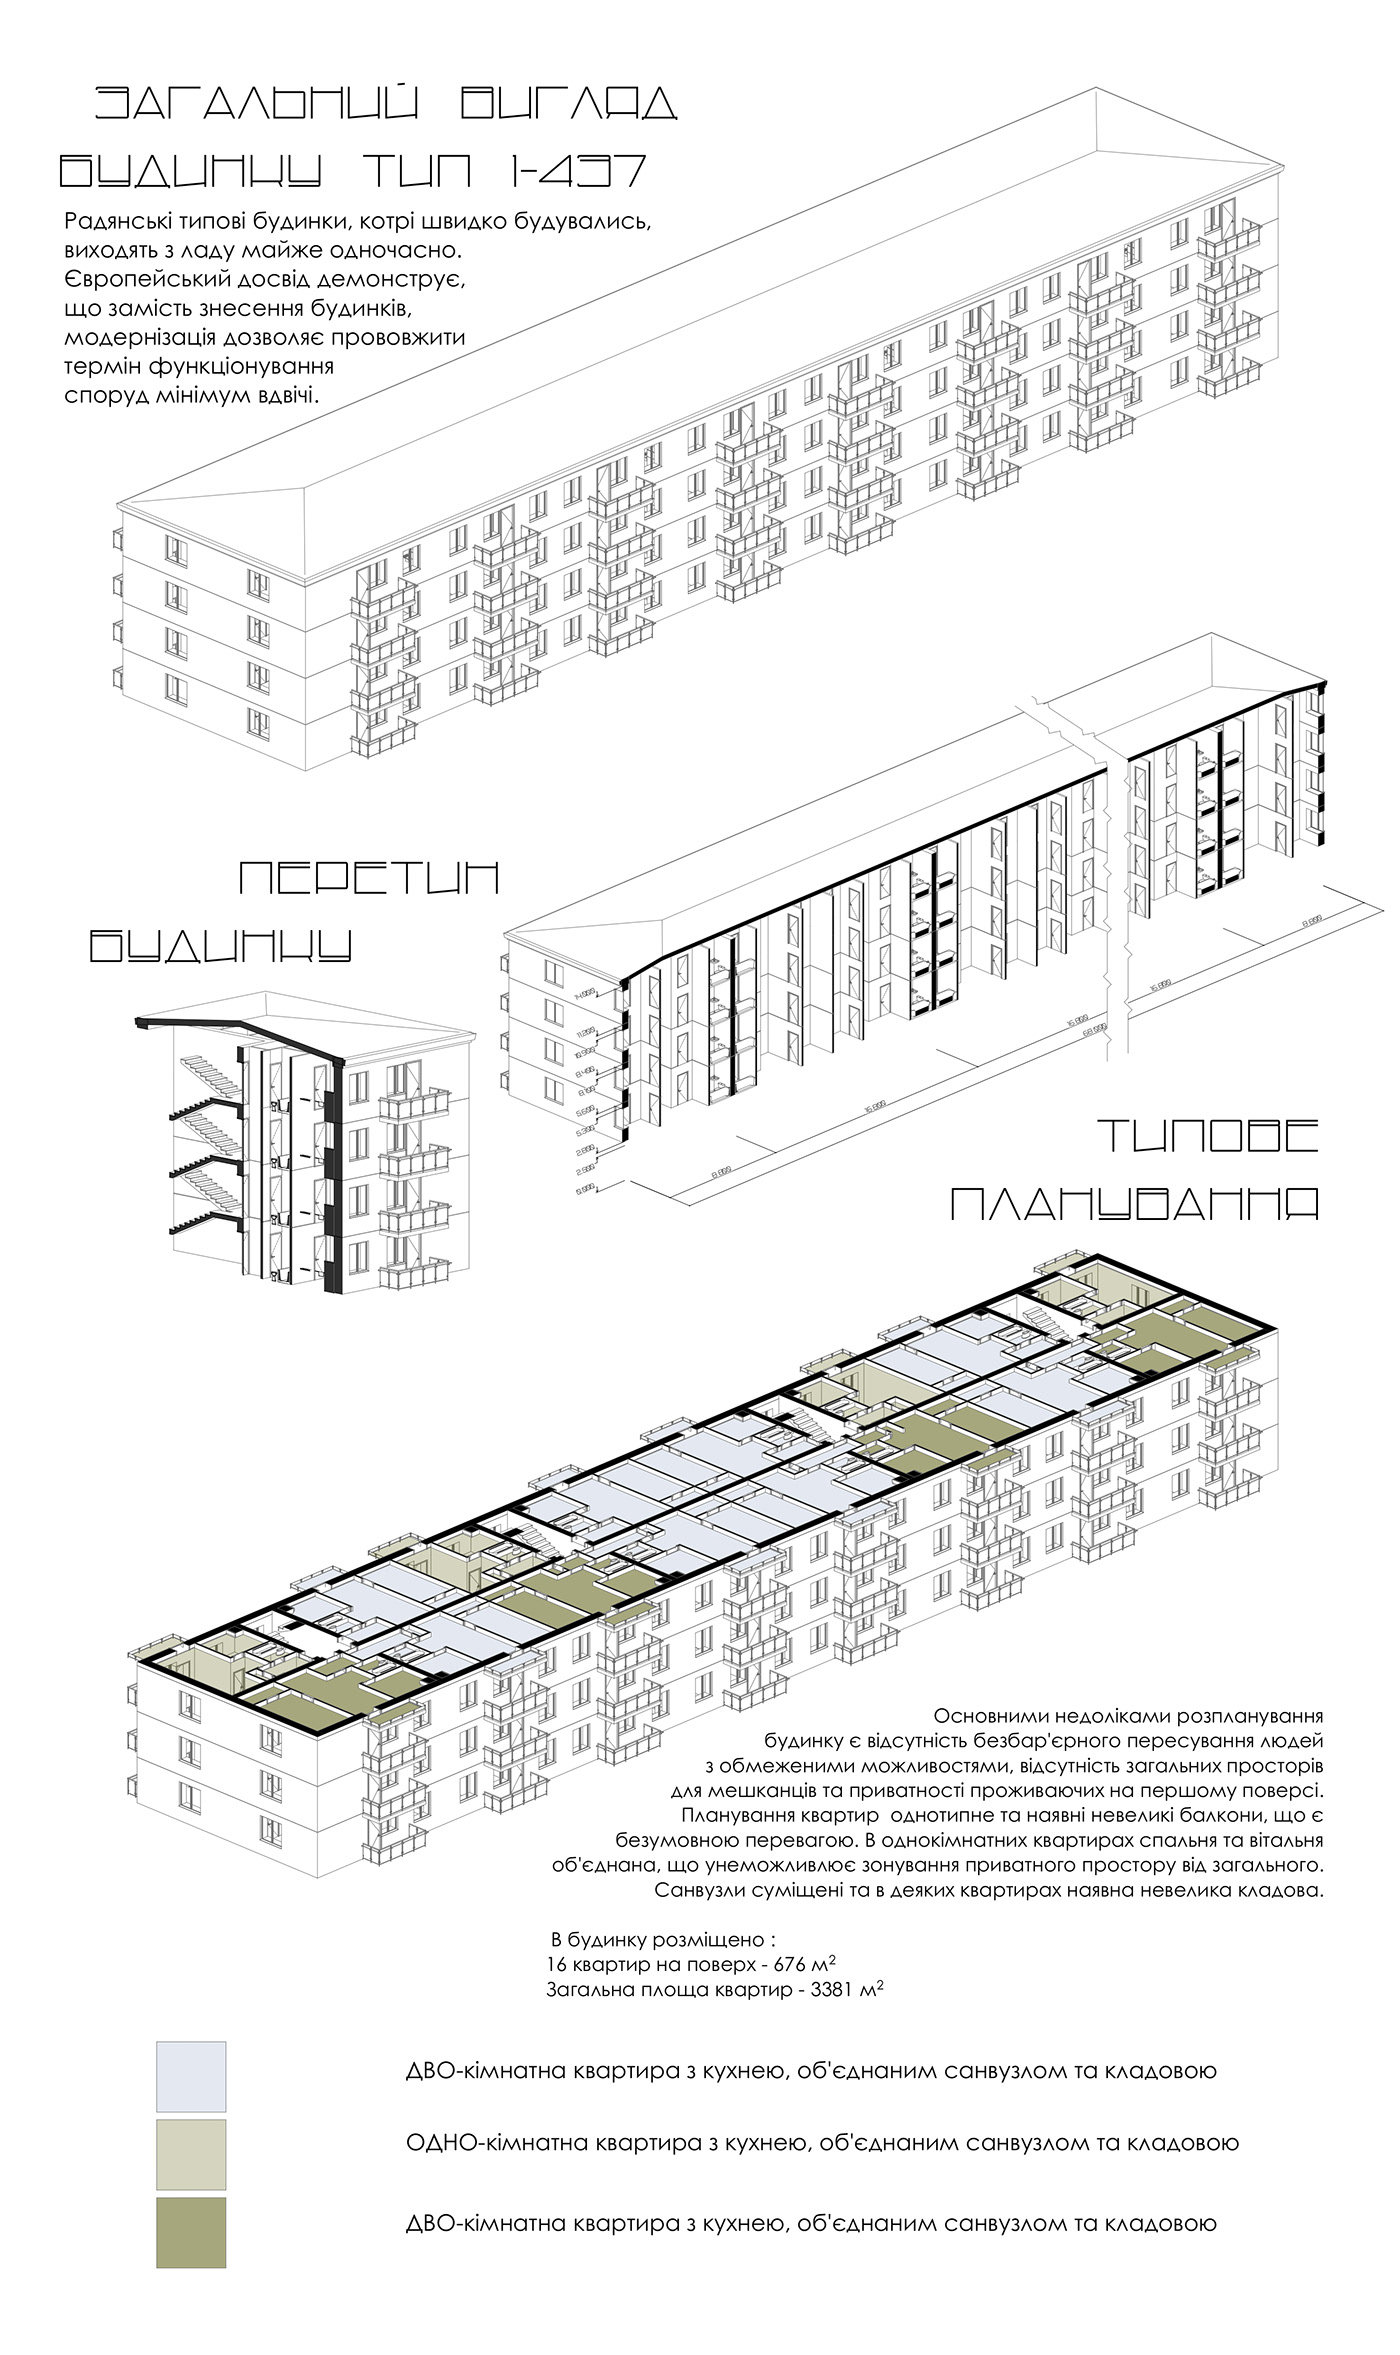 architecture concept exterior housing Project reconstruction renovation residential visualization yarotskadez